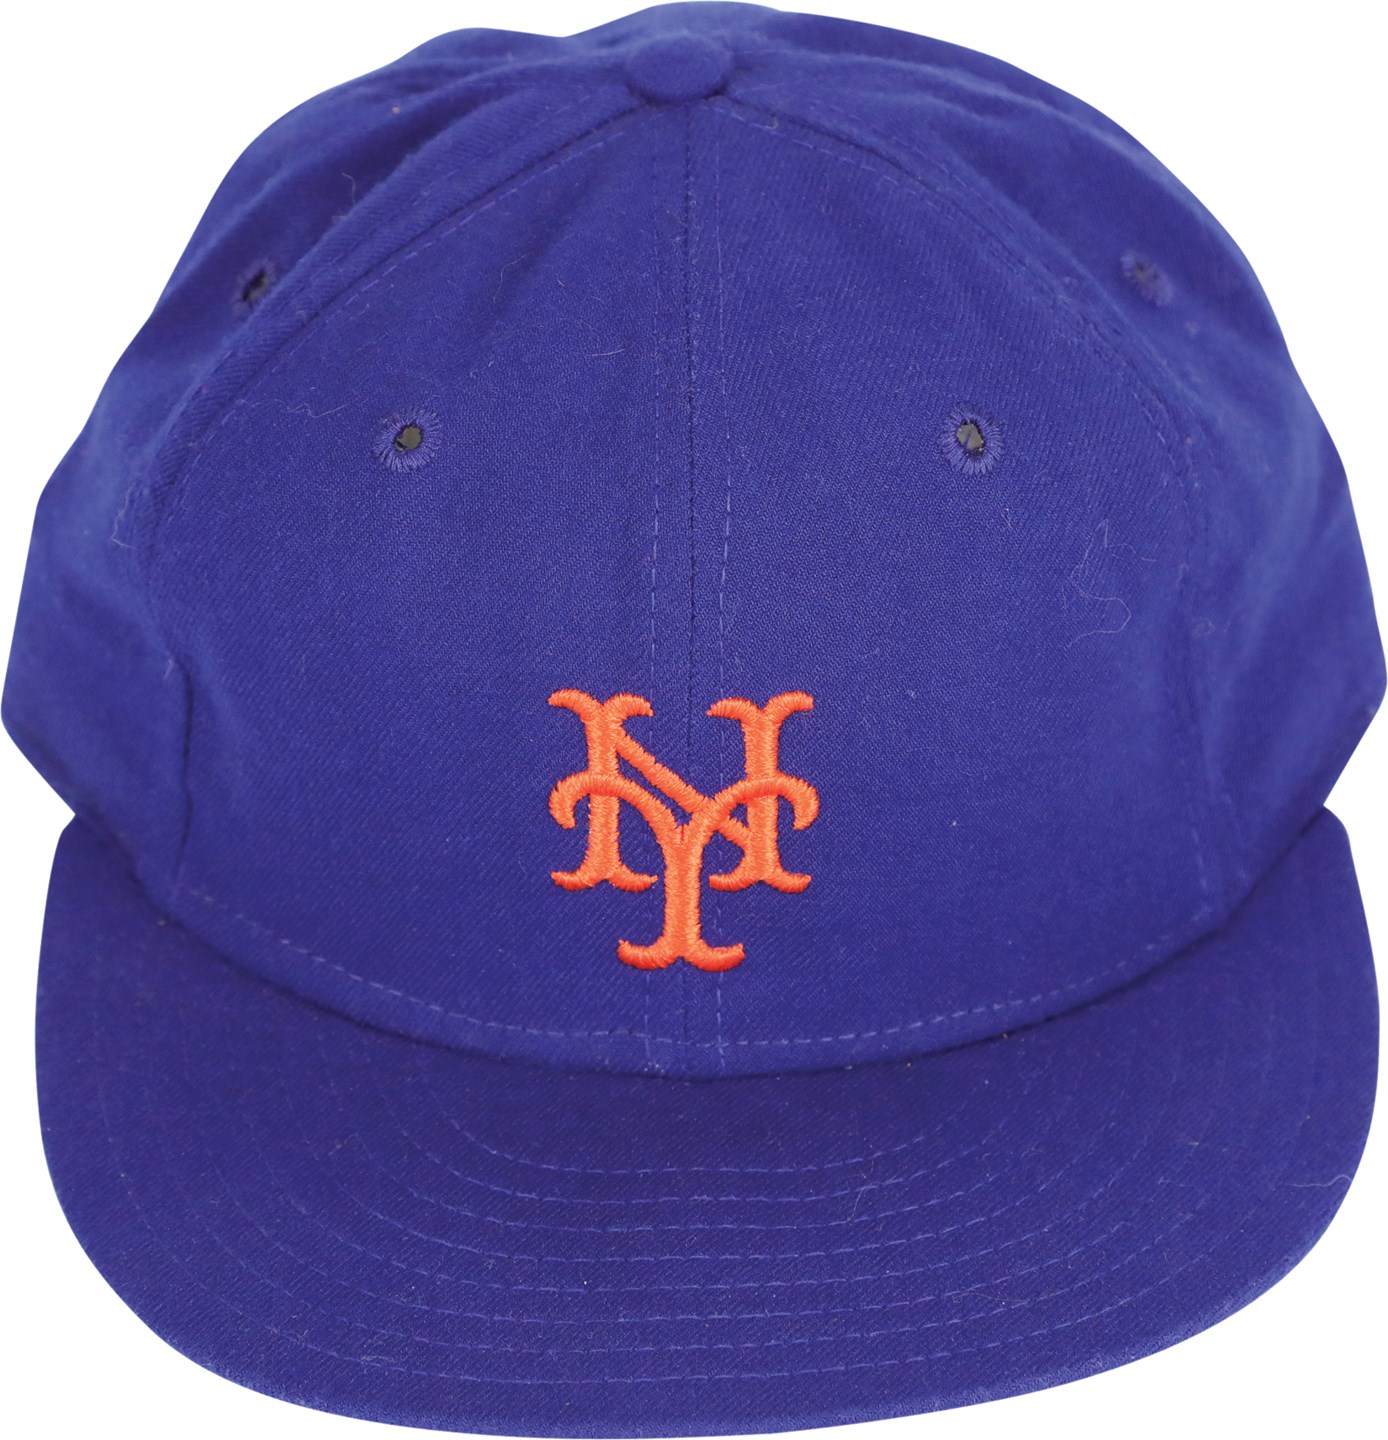 Baseball Equipment - 1983 Tom Seaver Final Season Game Used New York Mets Hat